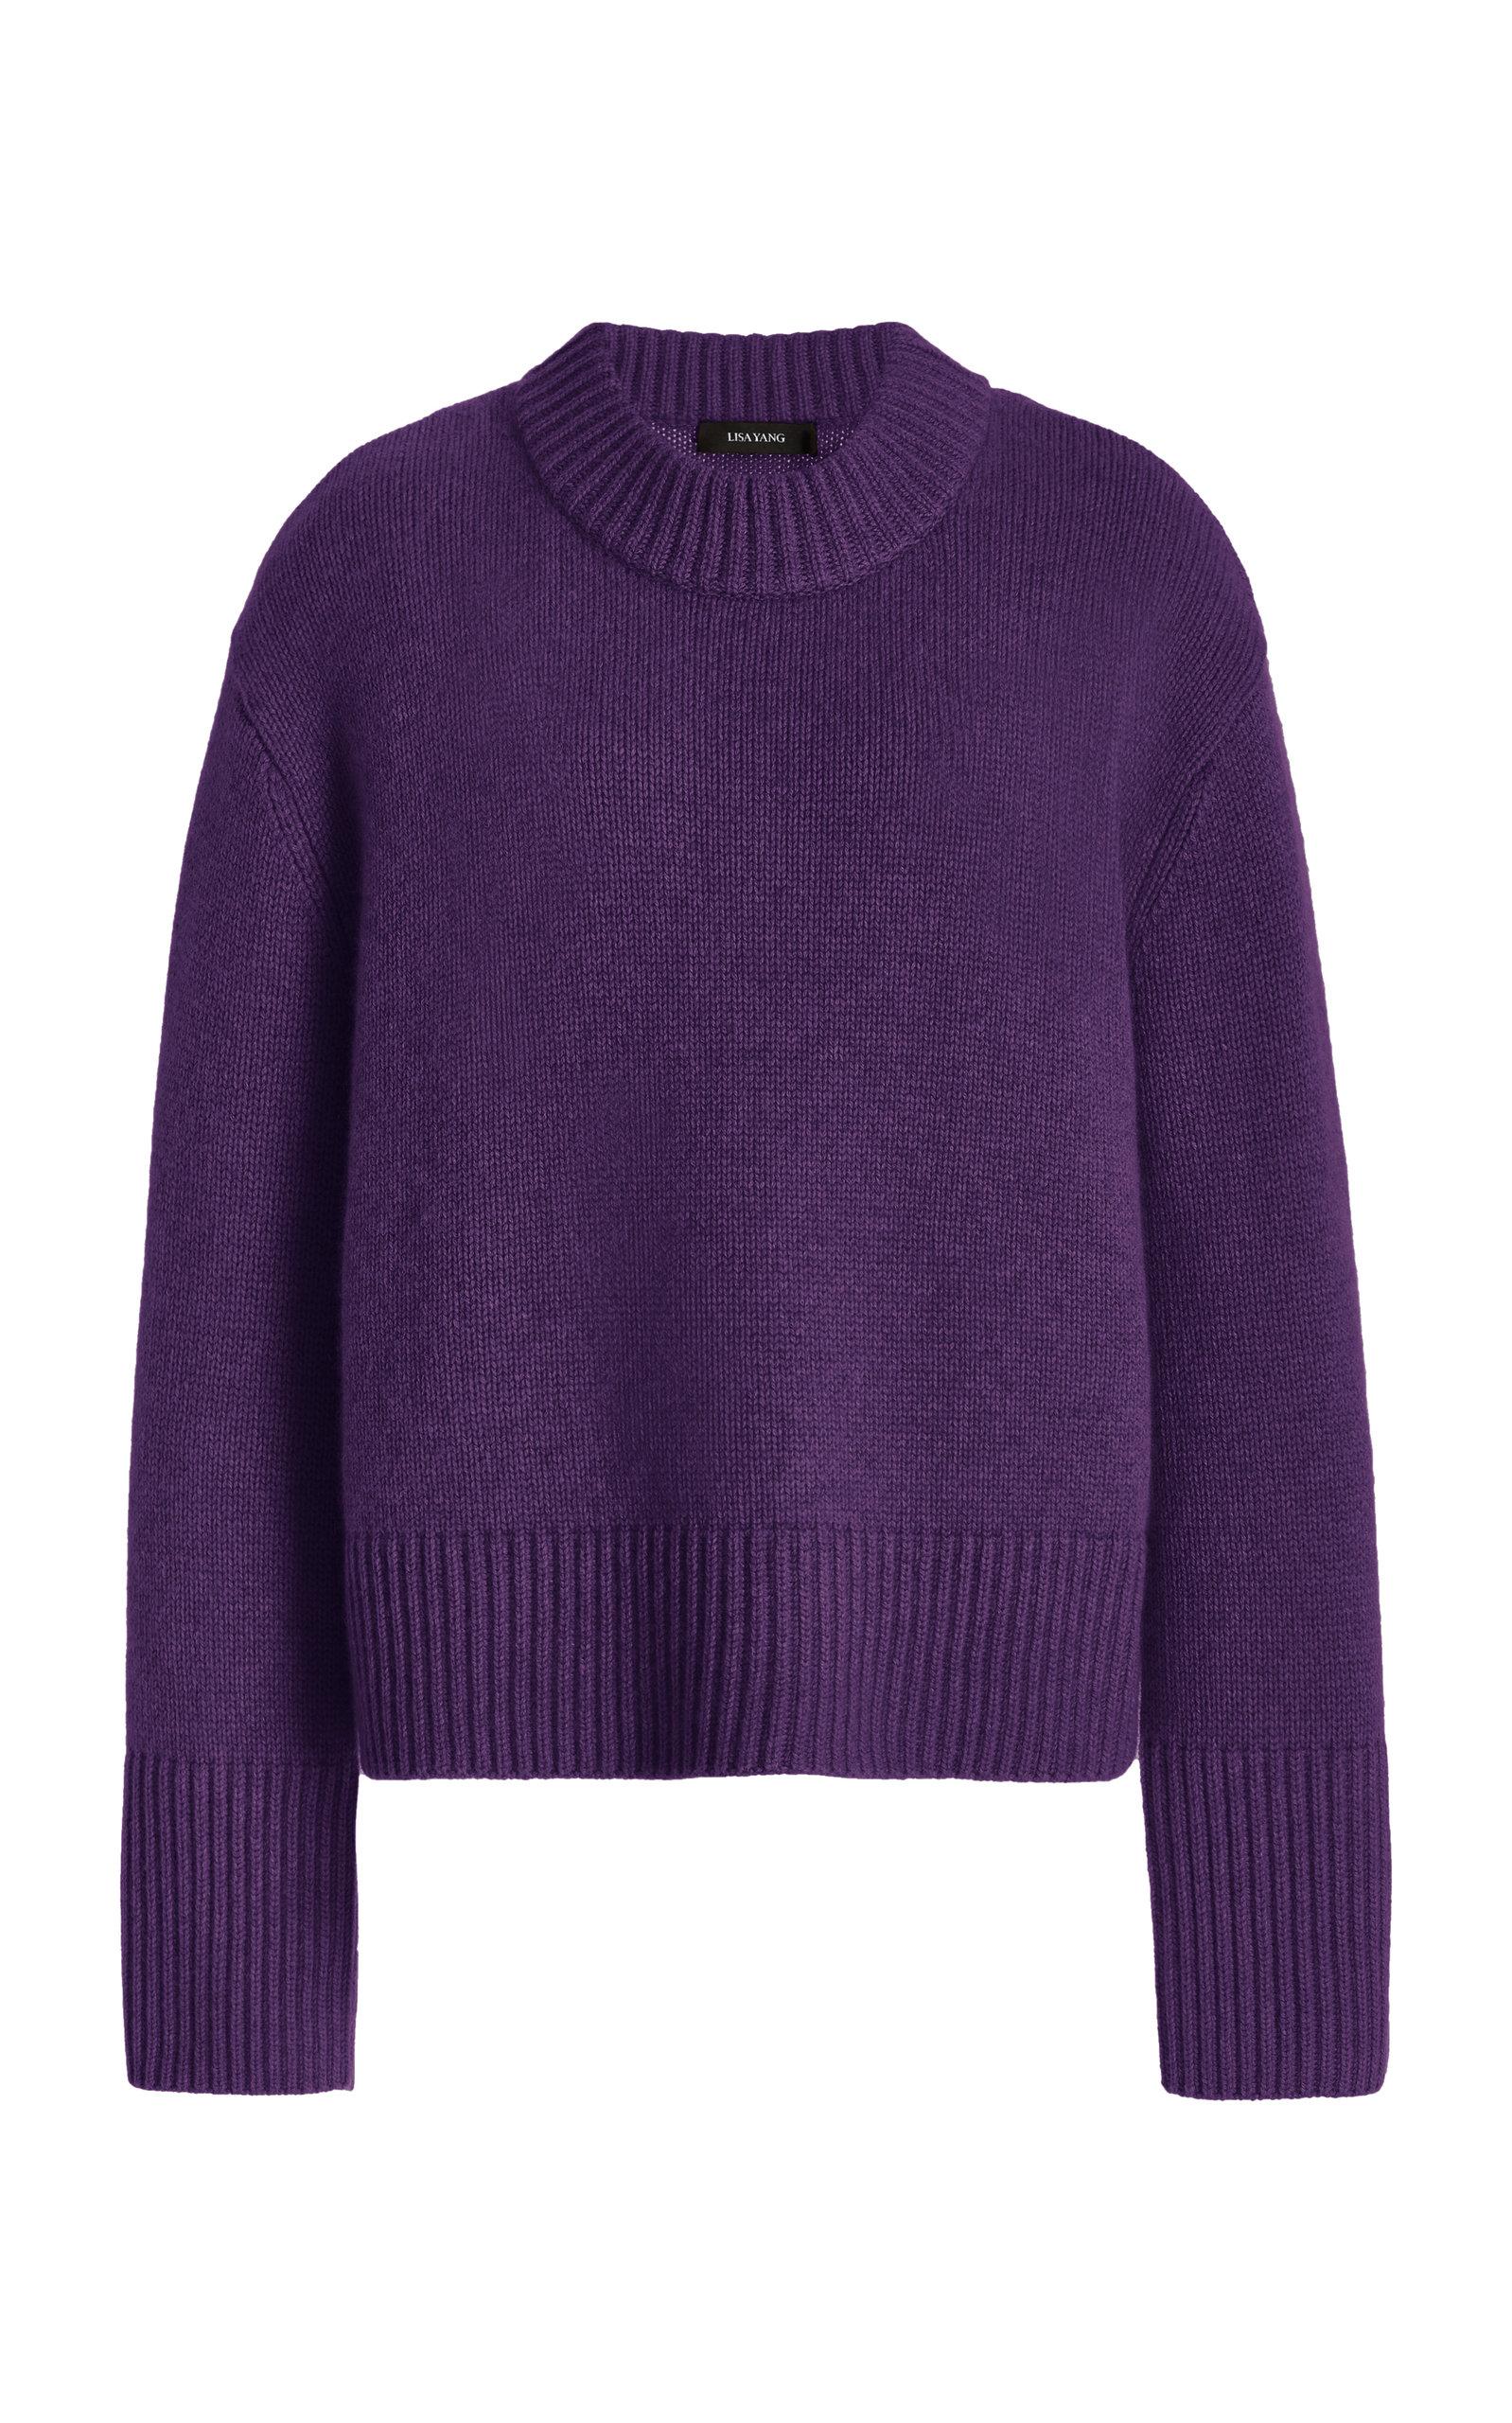 Lisa Yang Sony Cashmere Sweater in Purple | Lyst